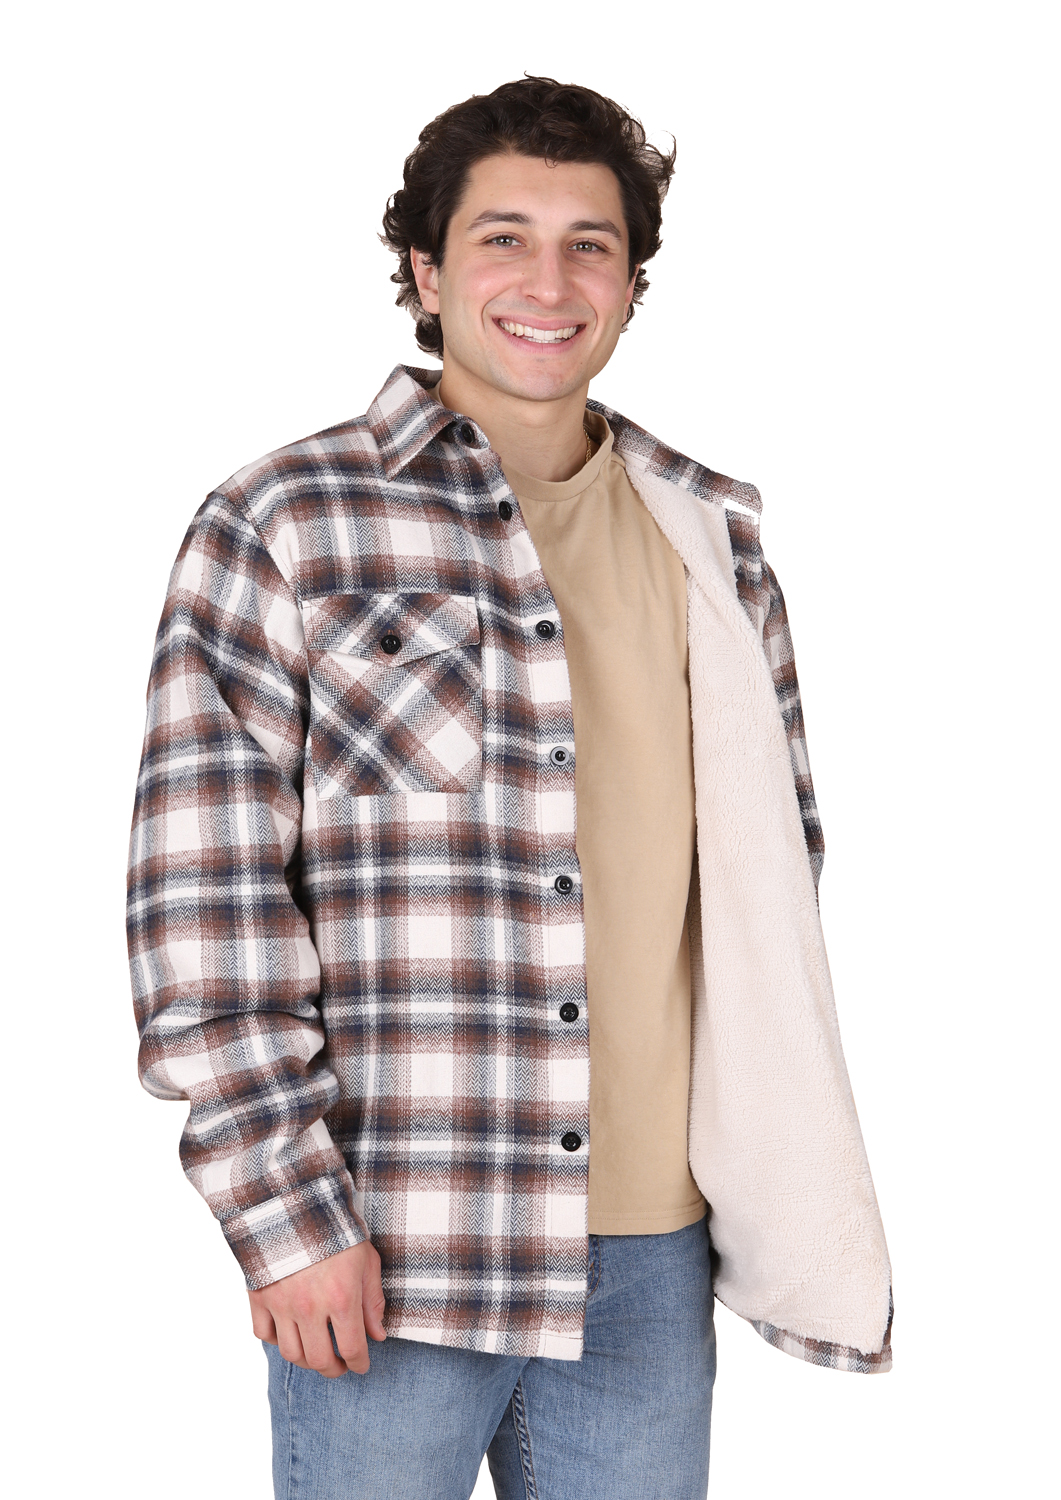 Maxxsel Sherpa Lined Flannel Plaid Shirt Jacket - Maxxsel Apparel Inc